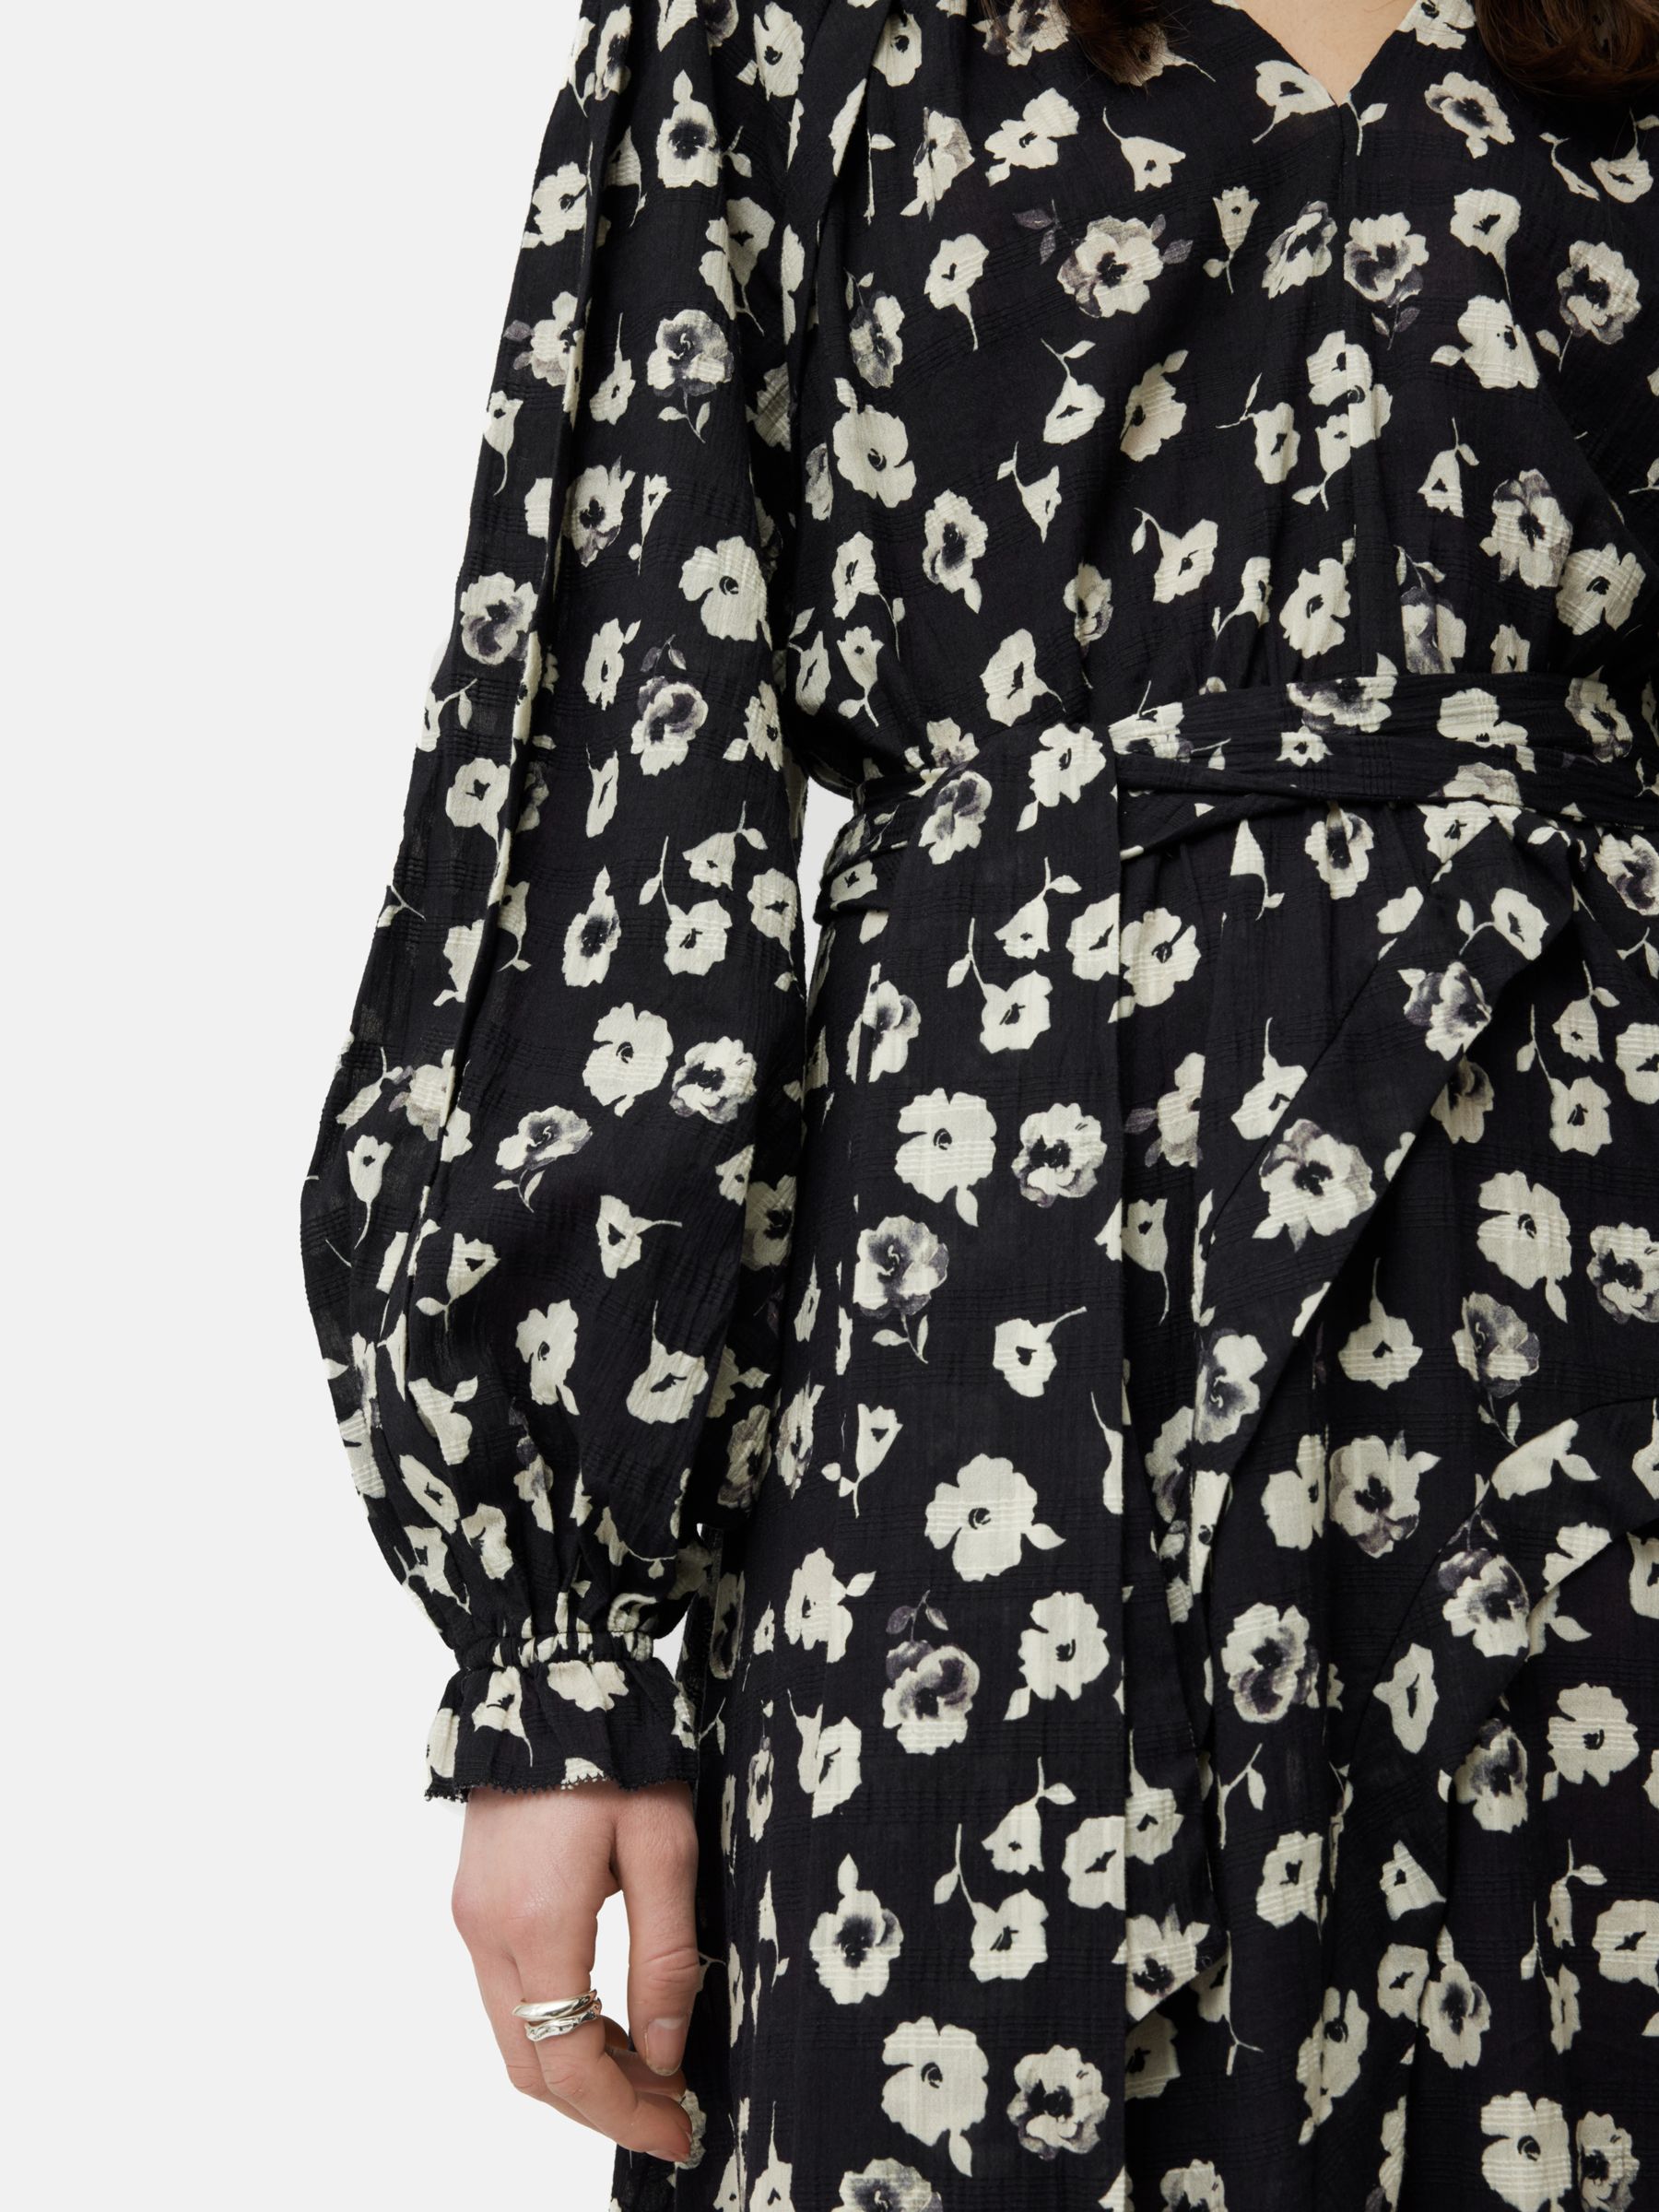 Jigsaw Grunge Floral Print Midi Dress, Black/Cream, 12